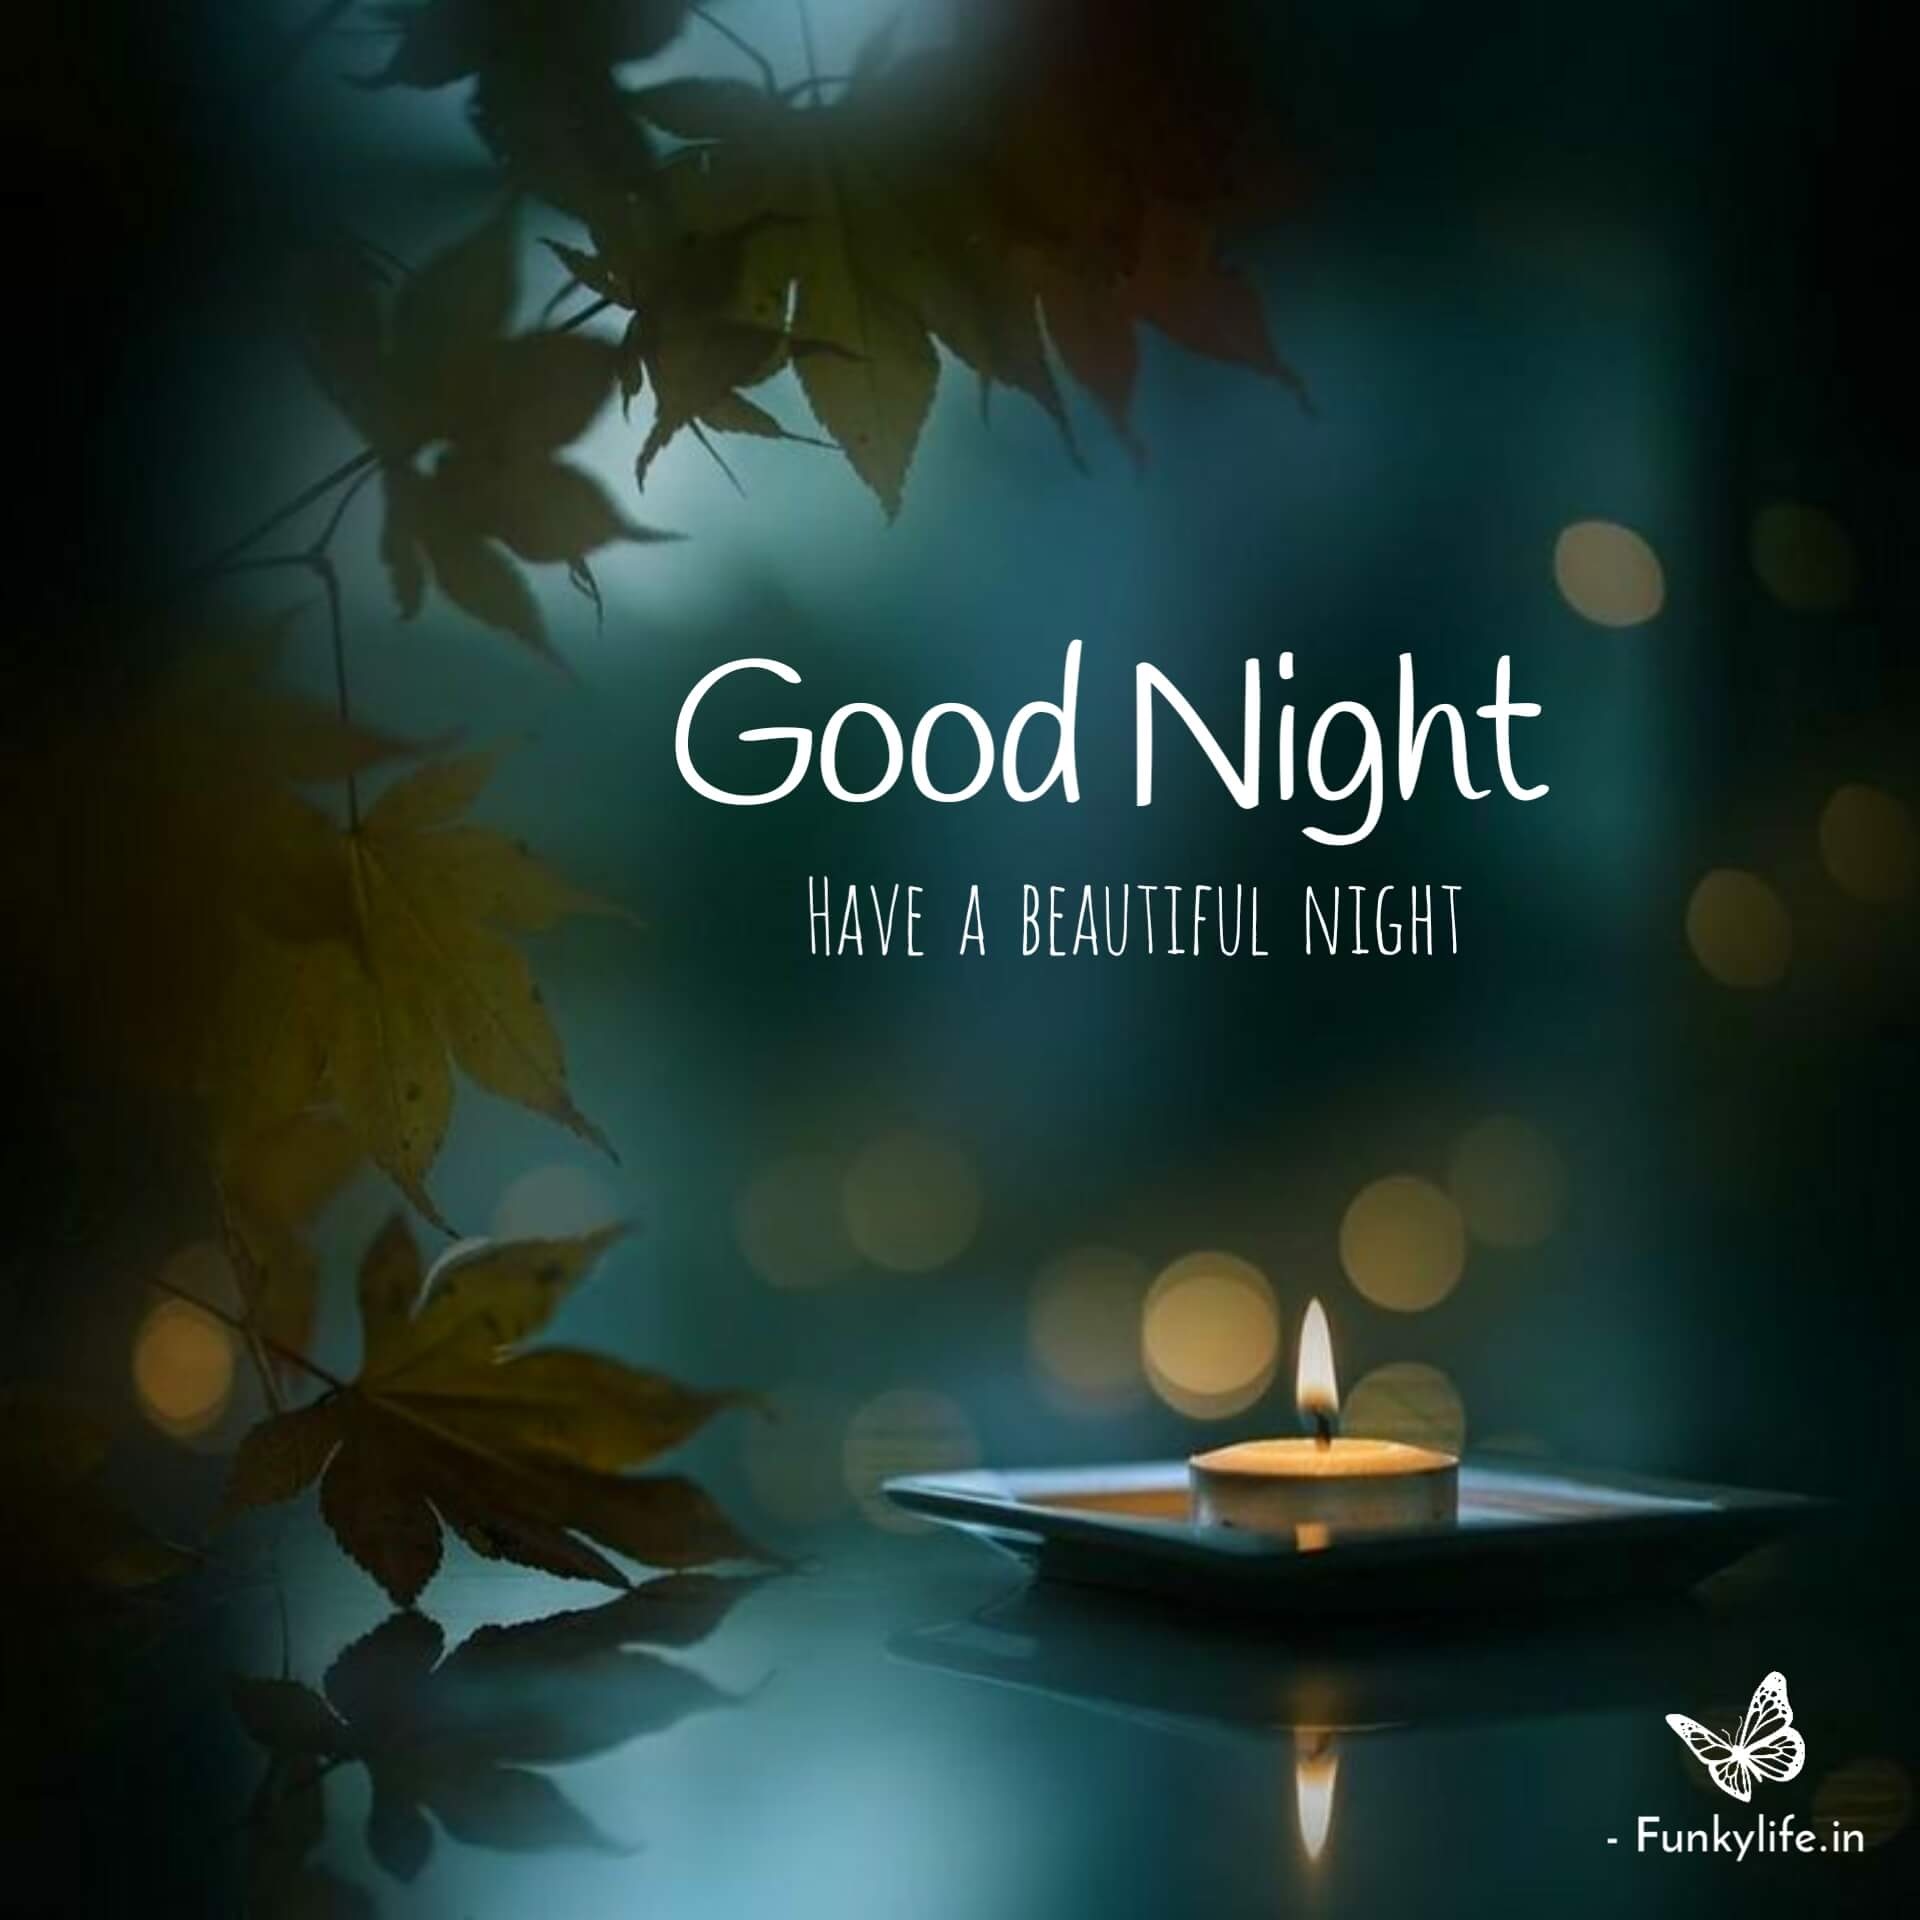 Good Night - Wishes